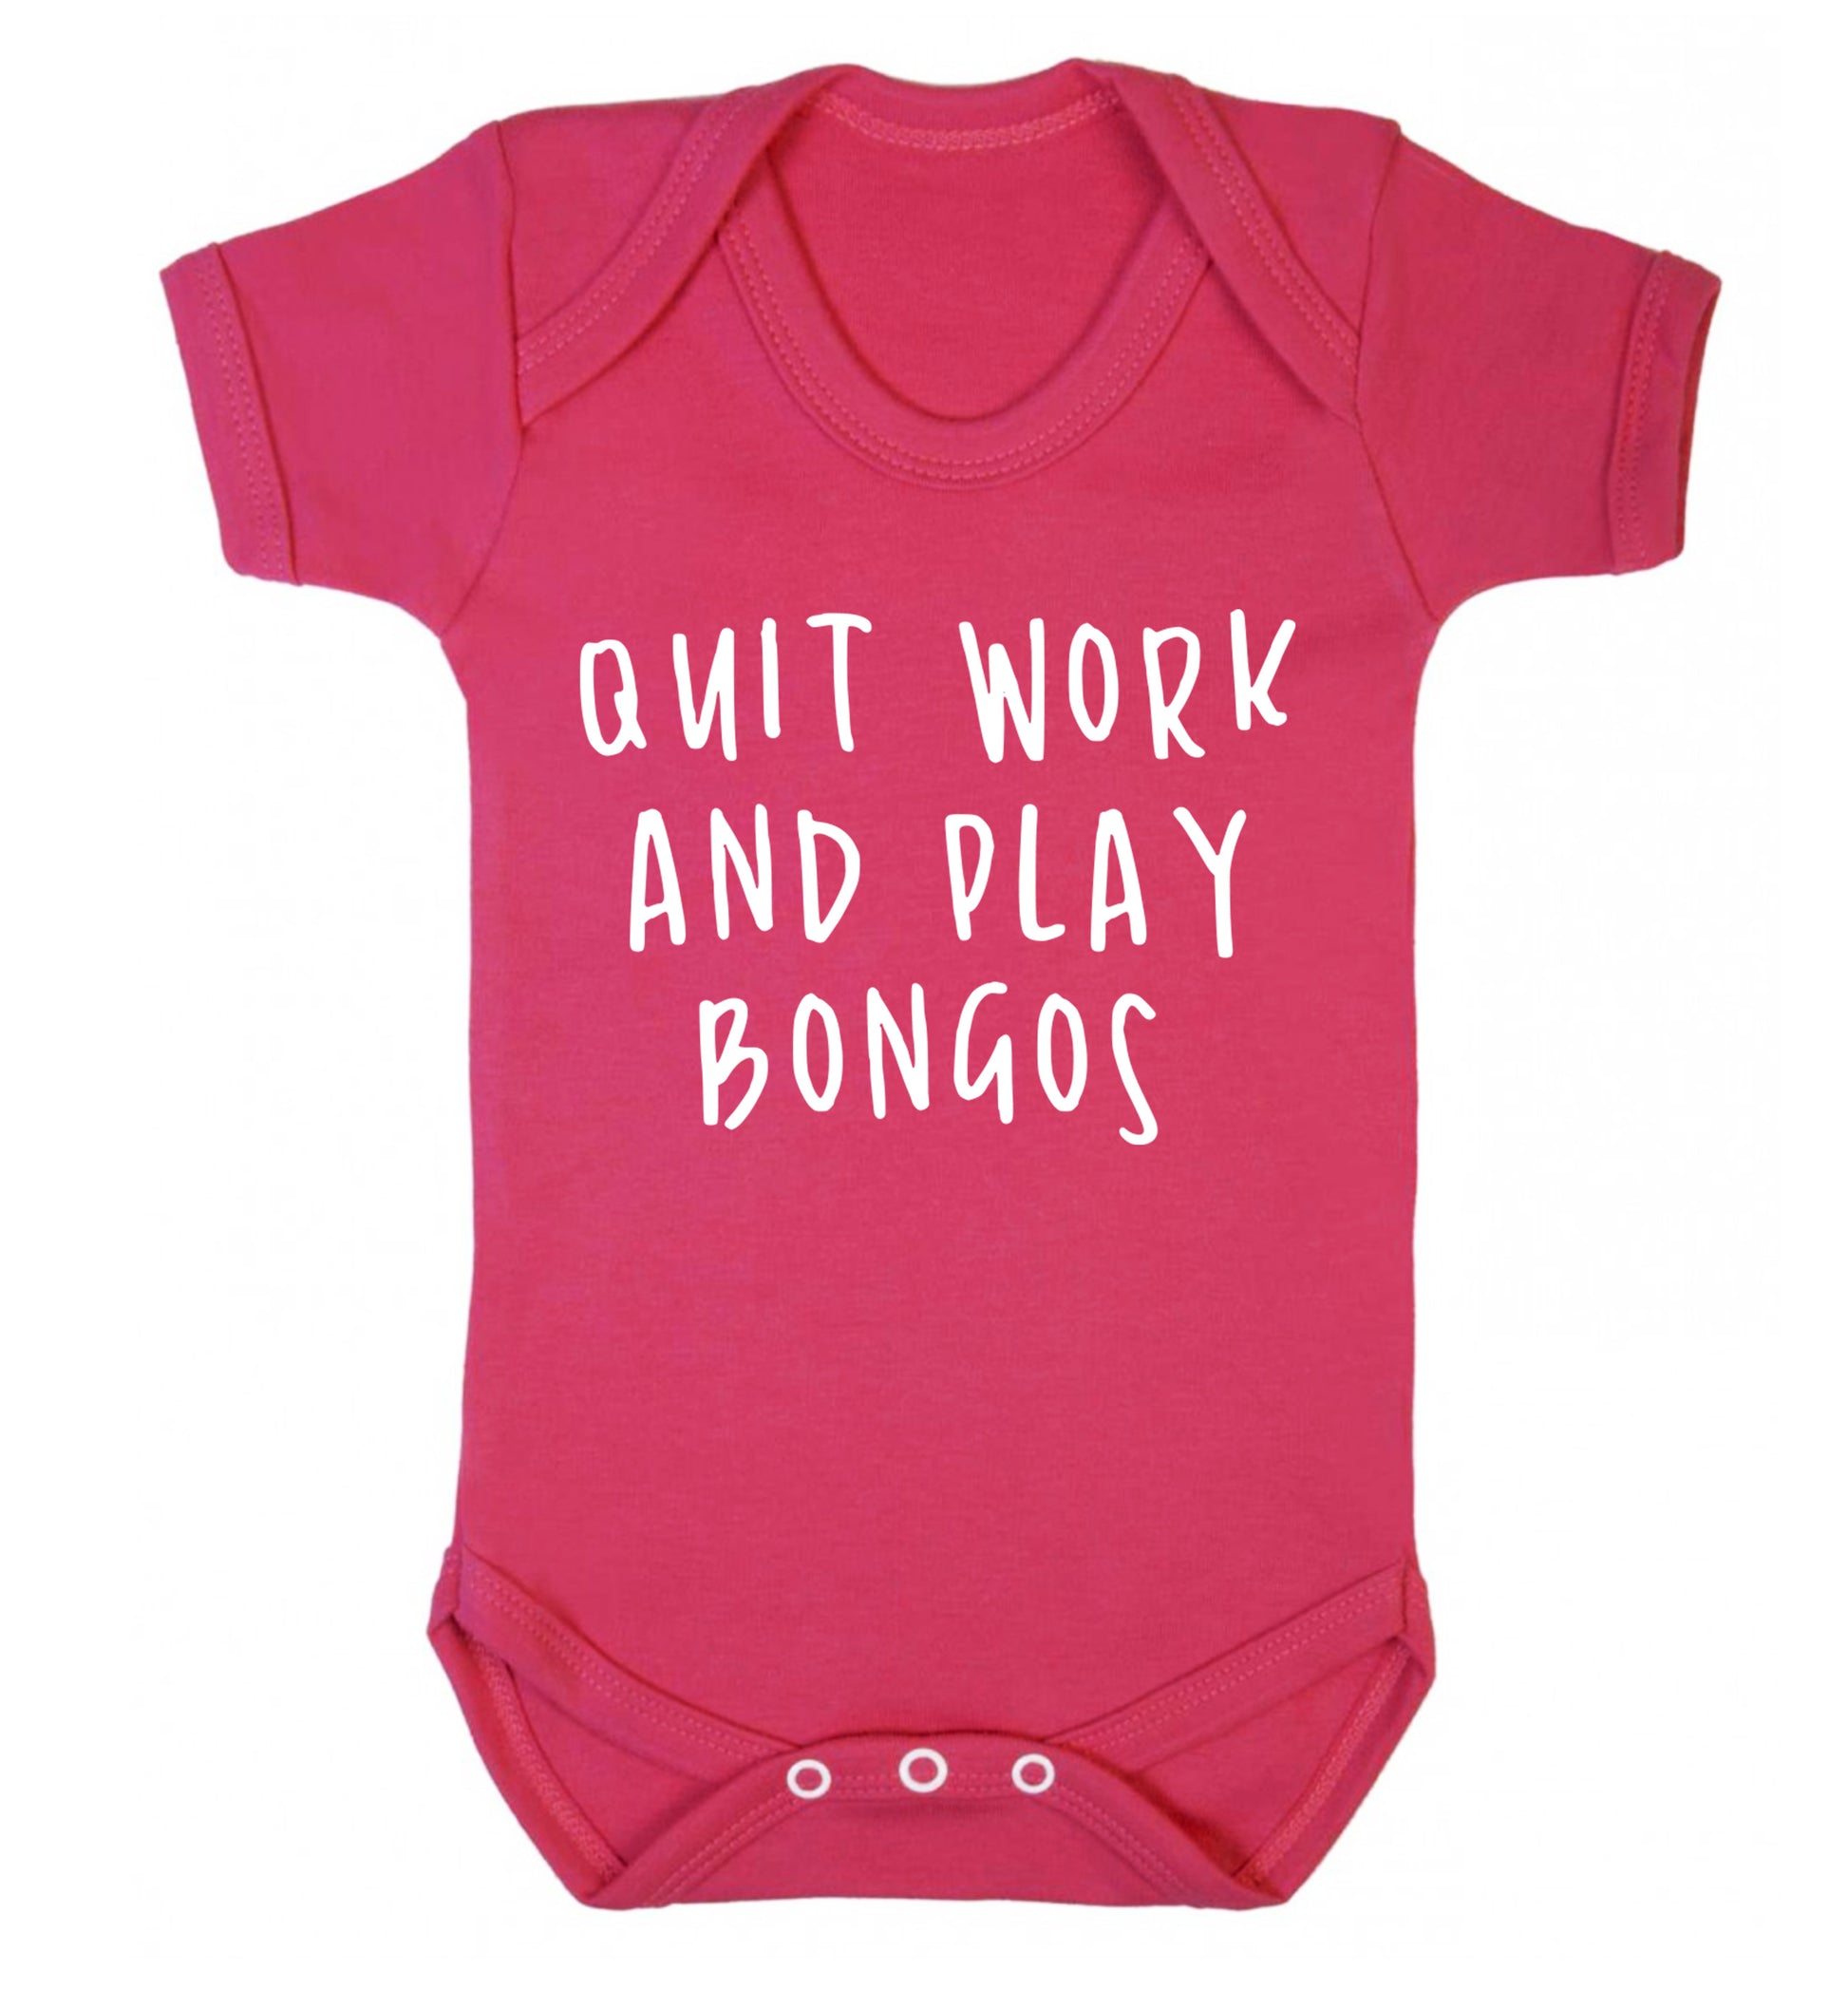 Quit work and play bongos Baby Vest dark pink 18-24 months